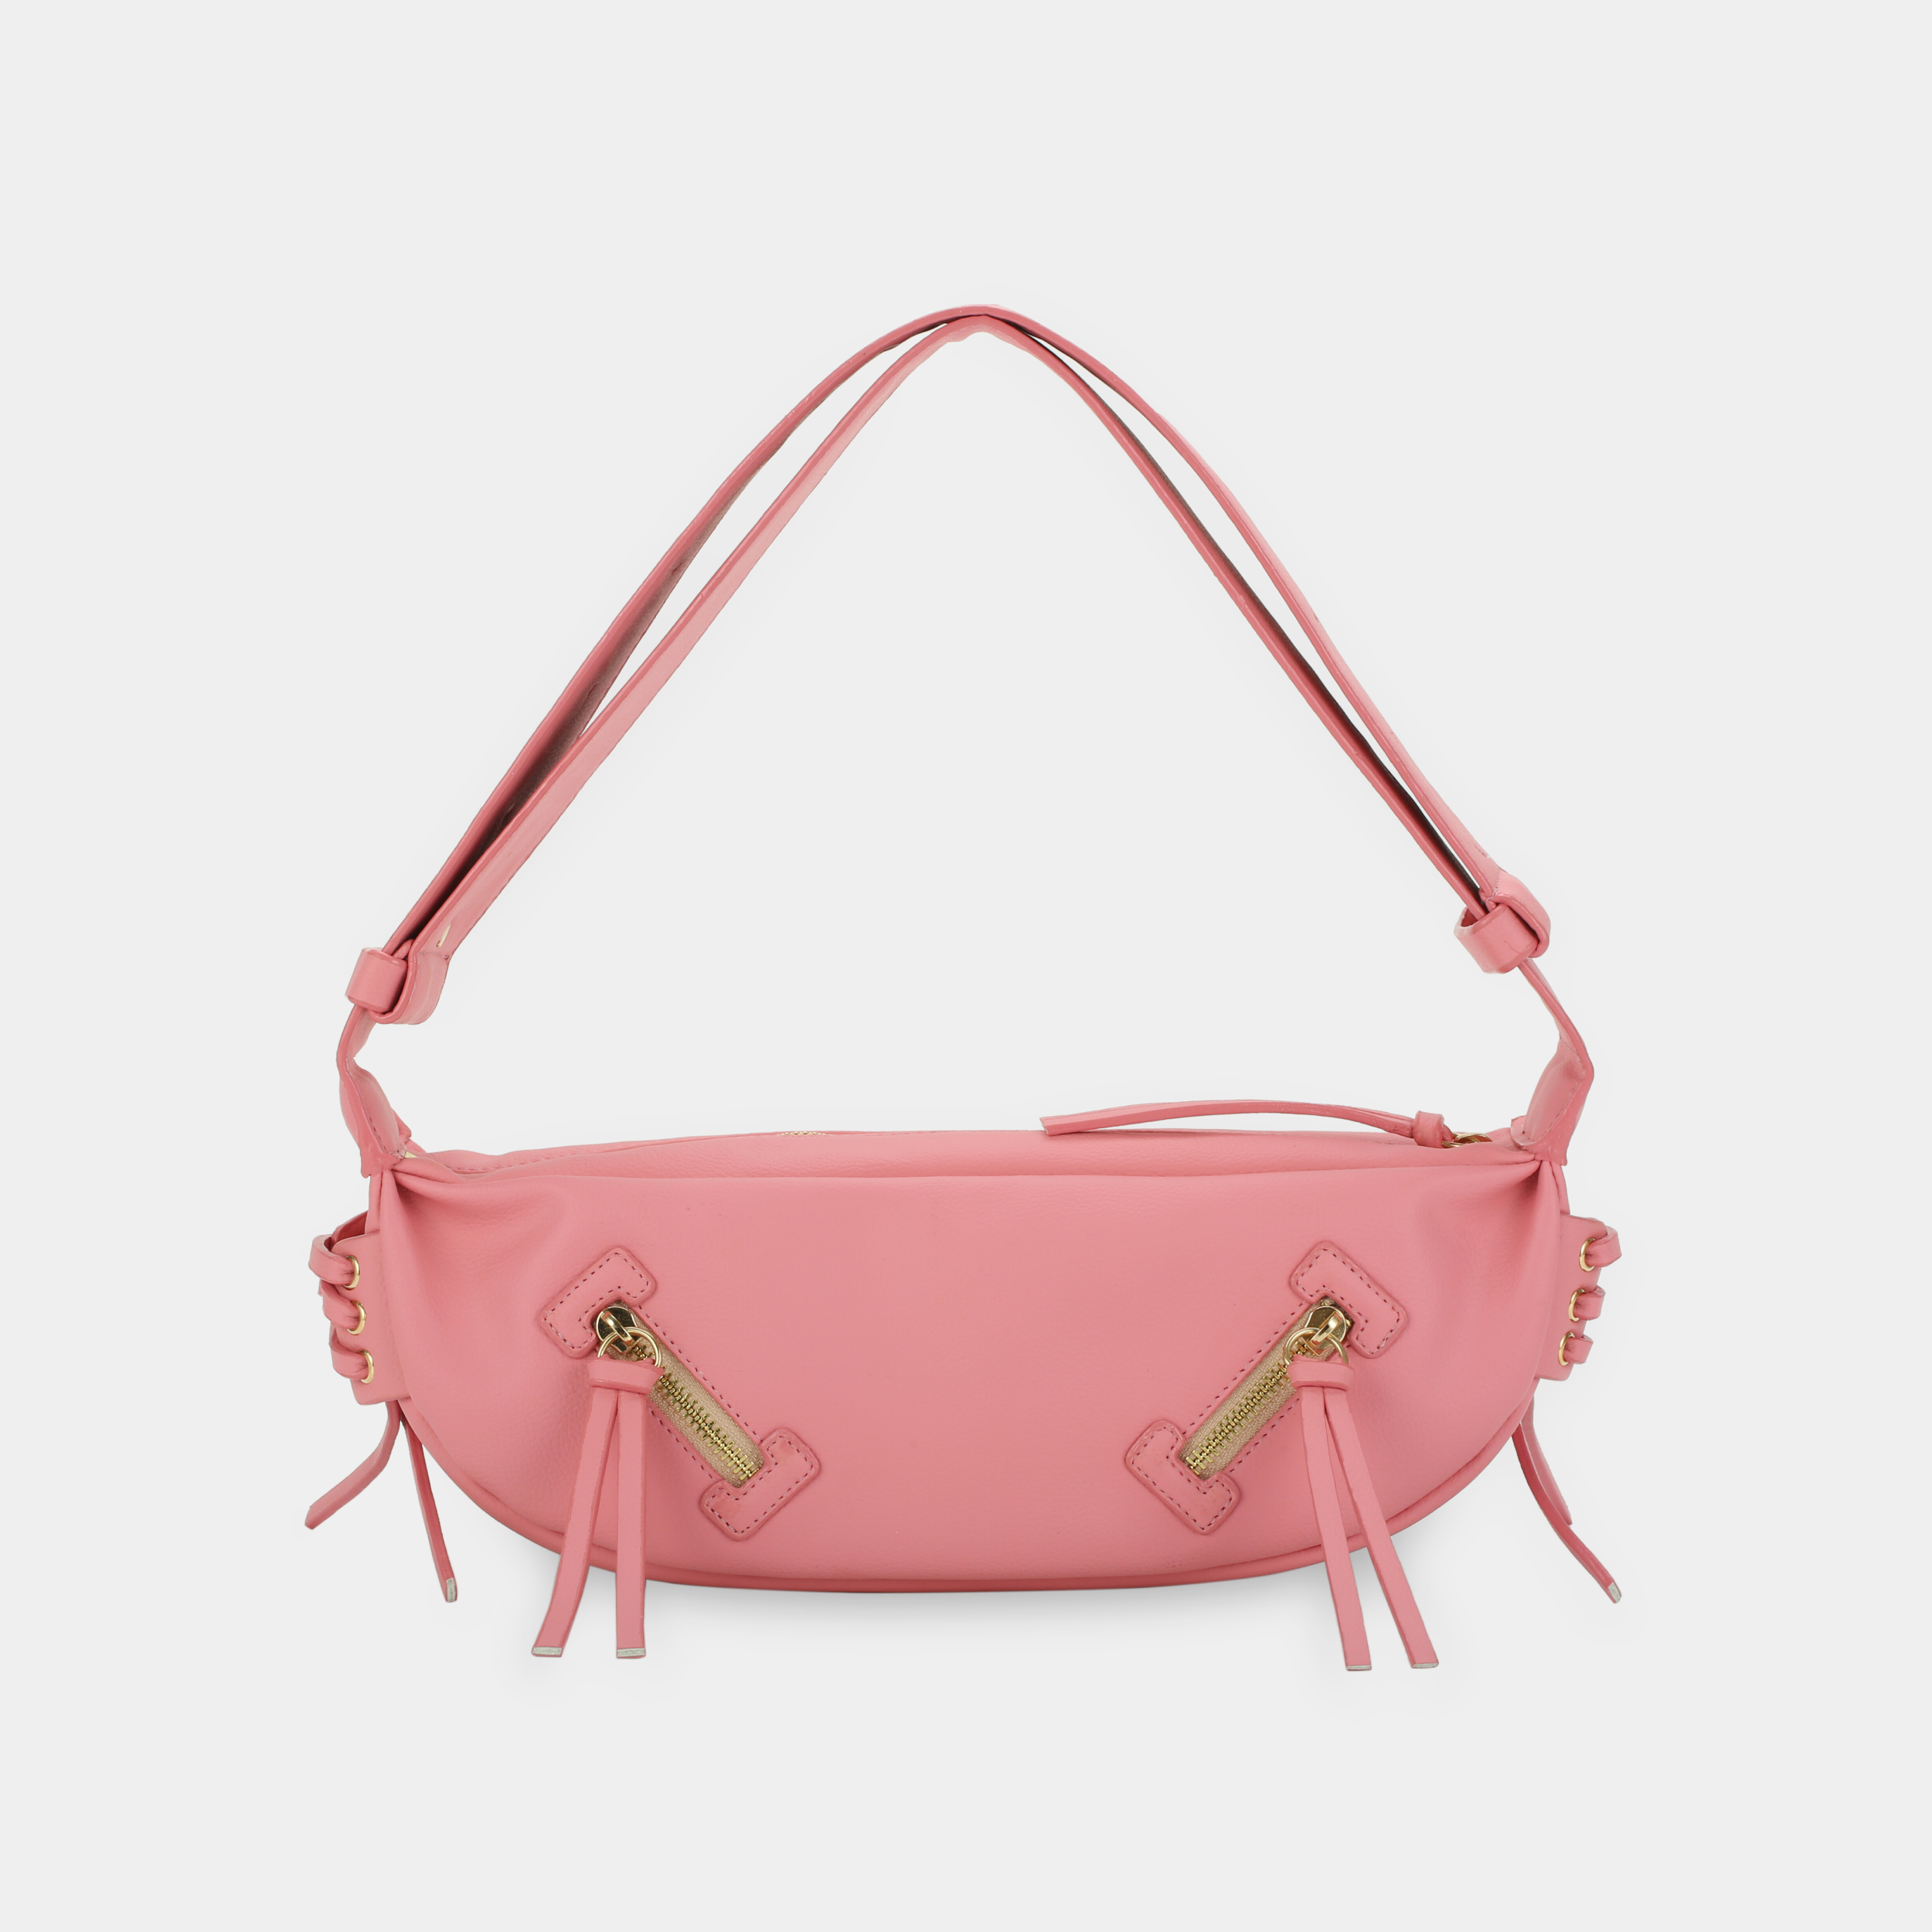 LACE bag large size (M) Pink pastel